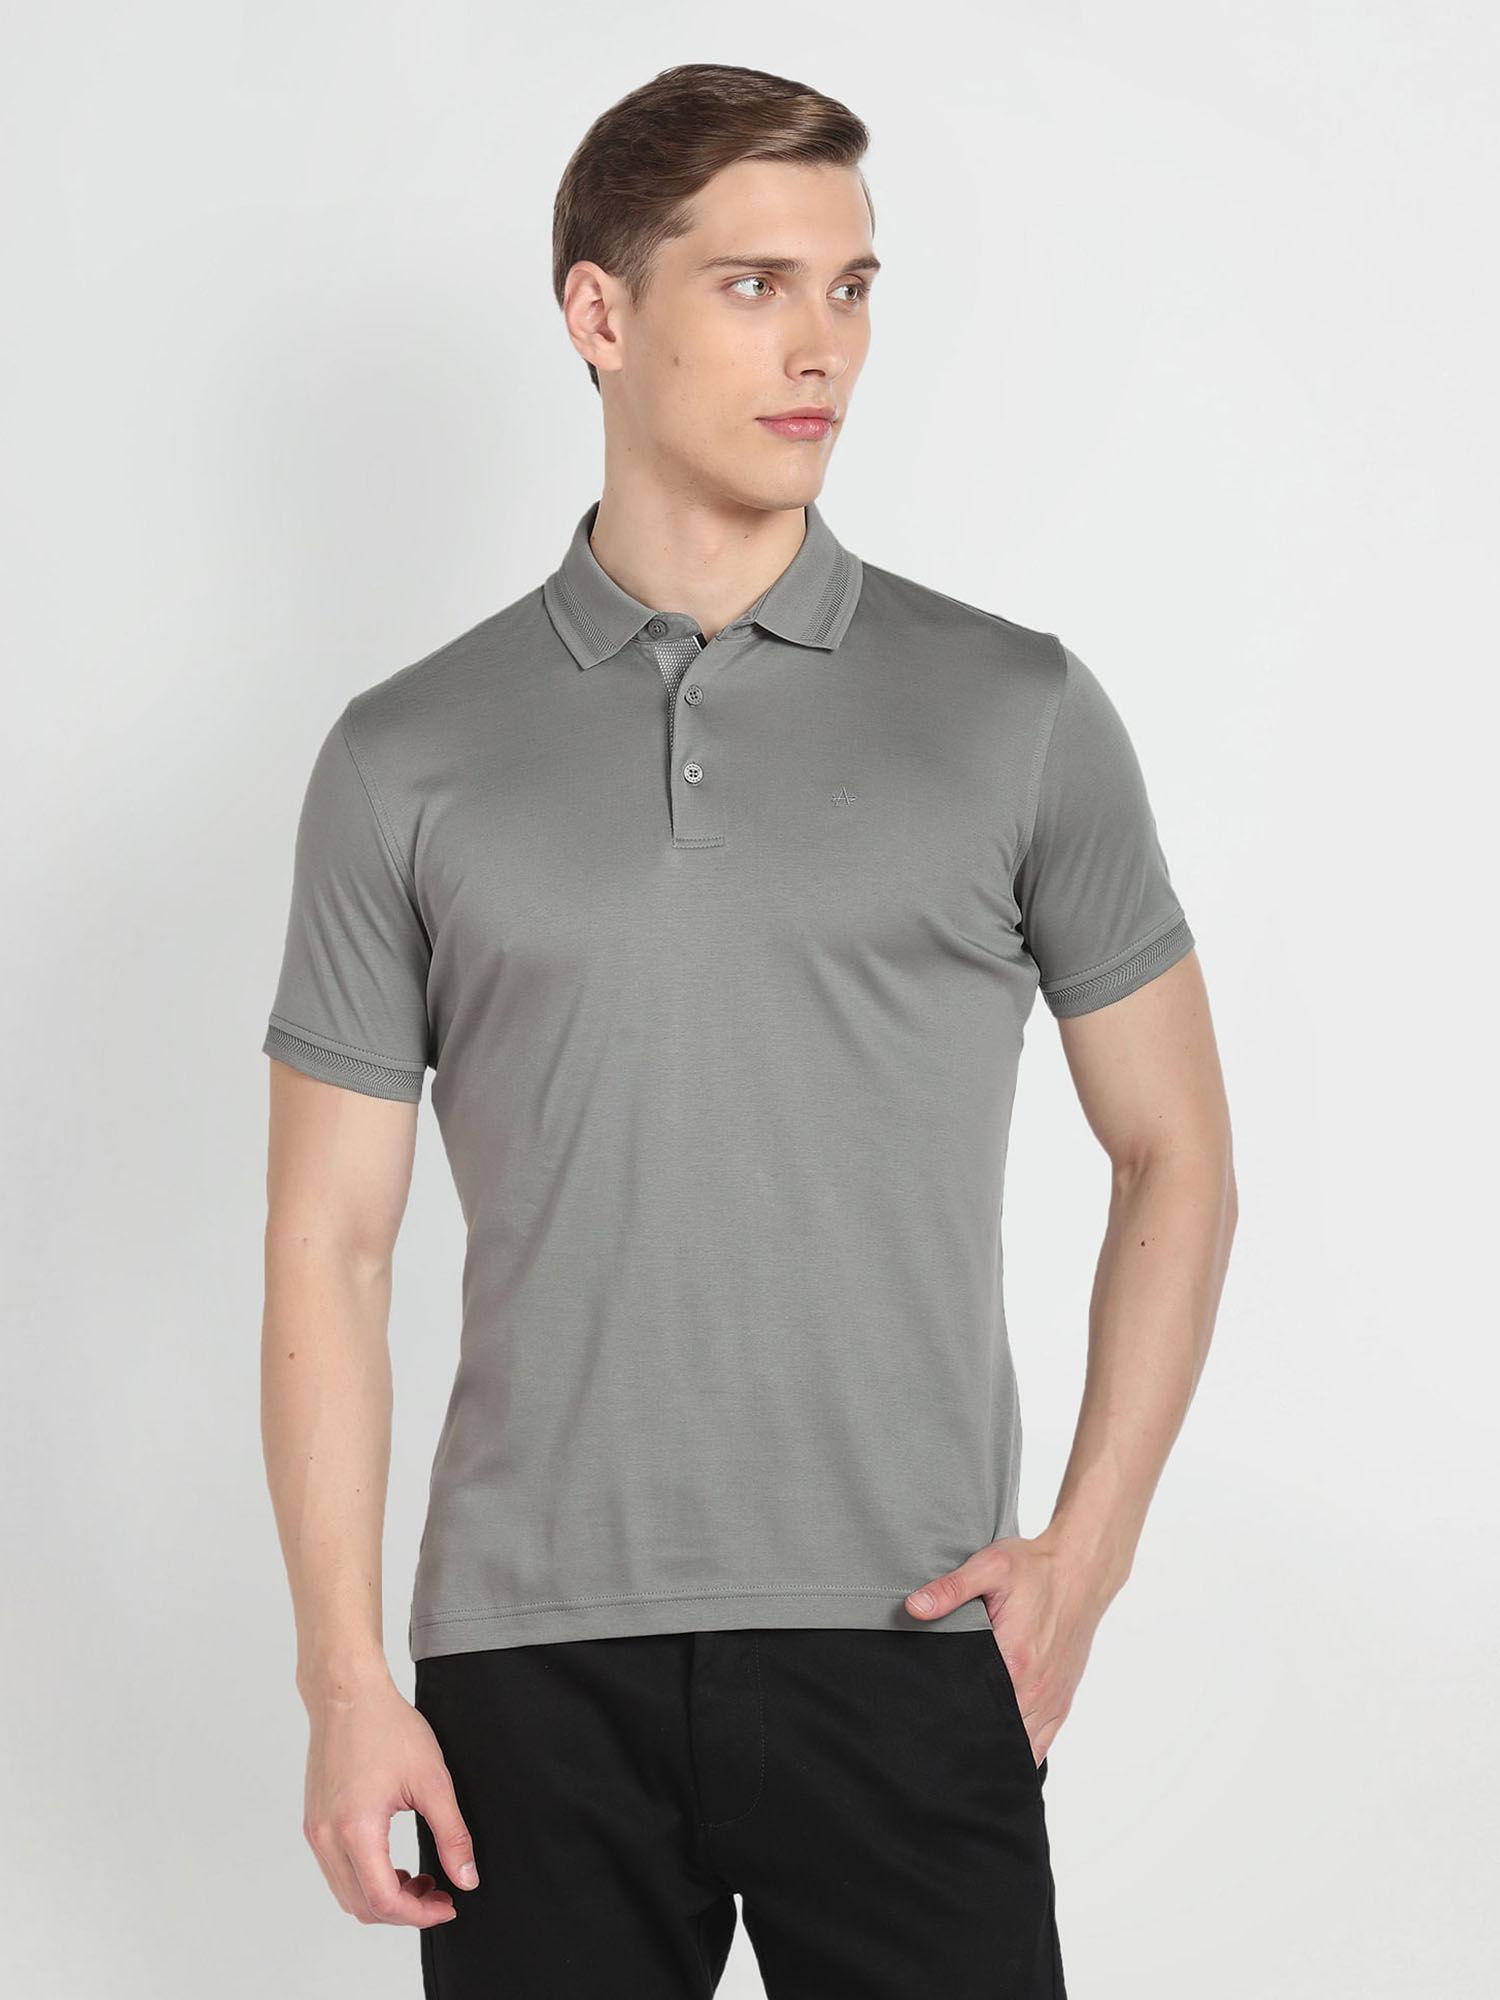 grey mercerised cotton solid polo t-shirt